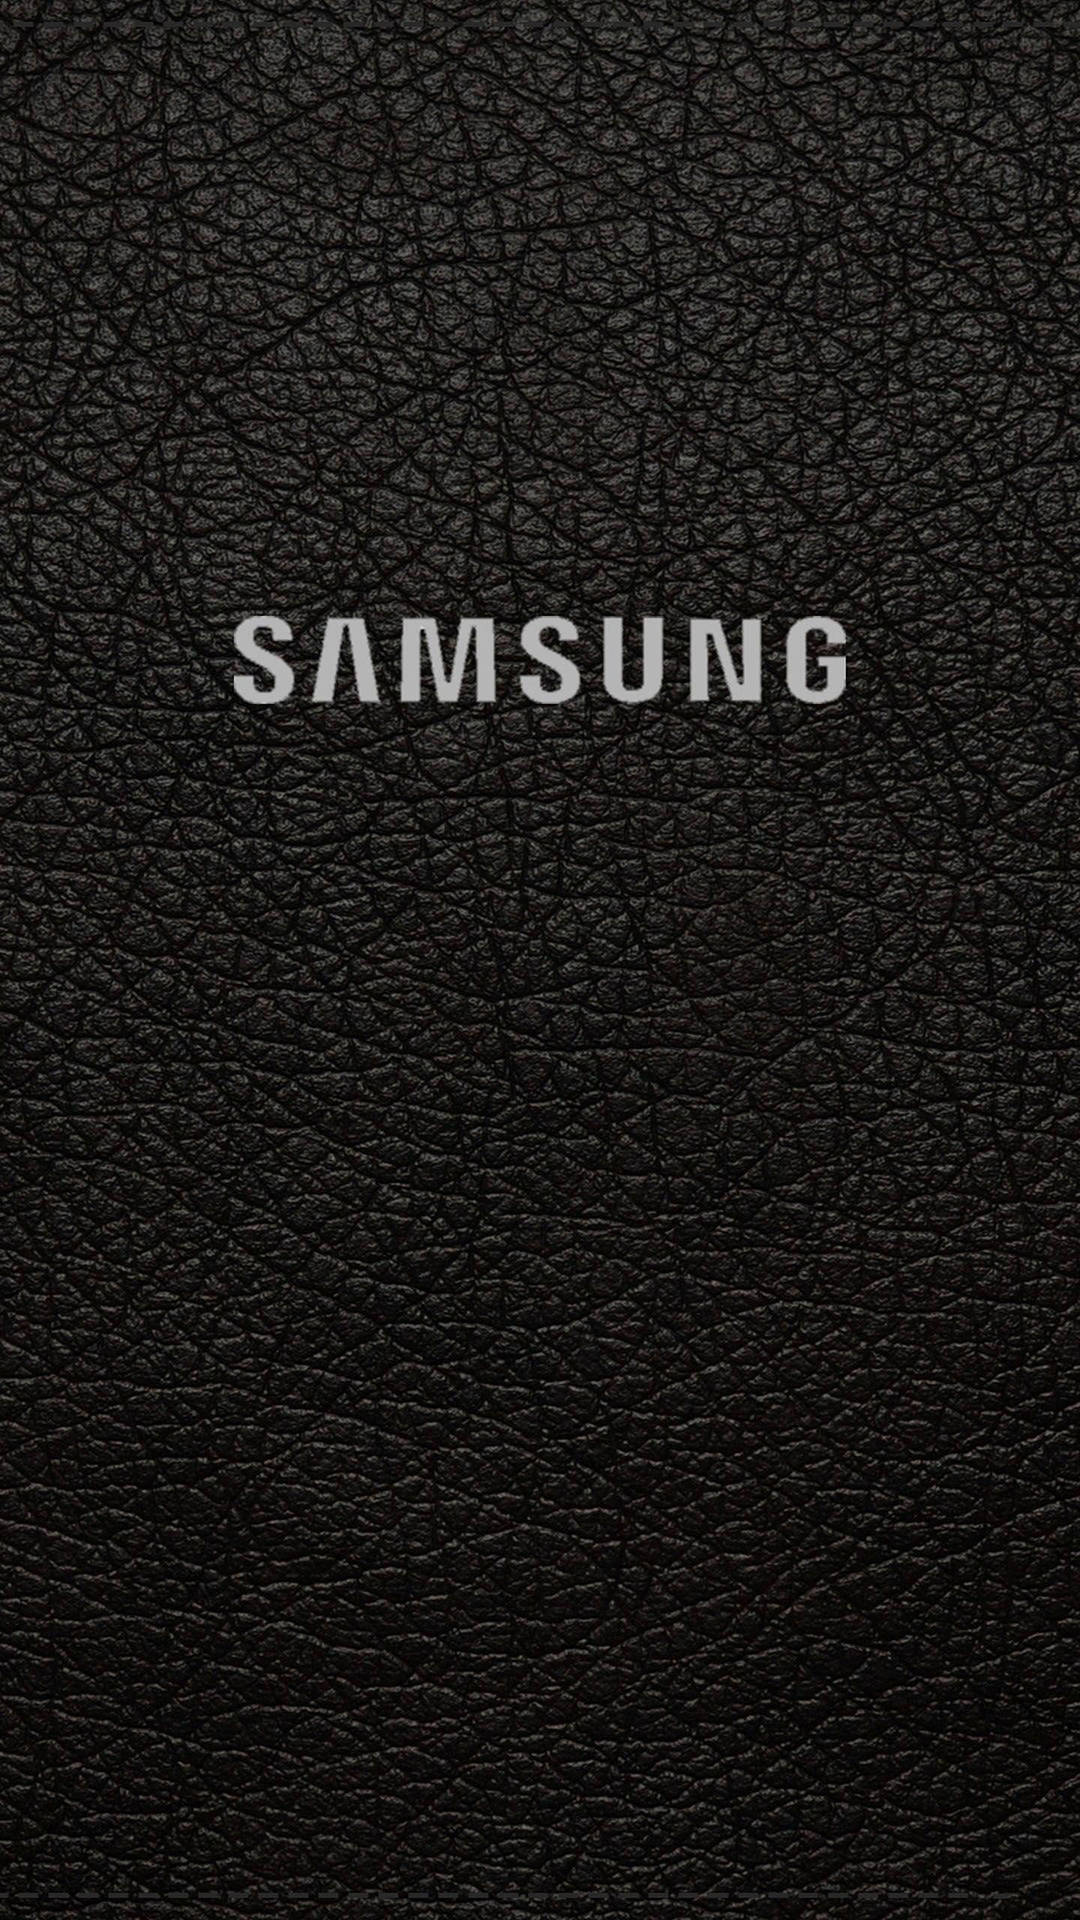 Samsung Mobile Logo On Leather Wallpaper